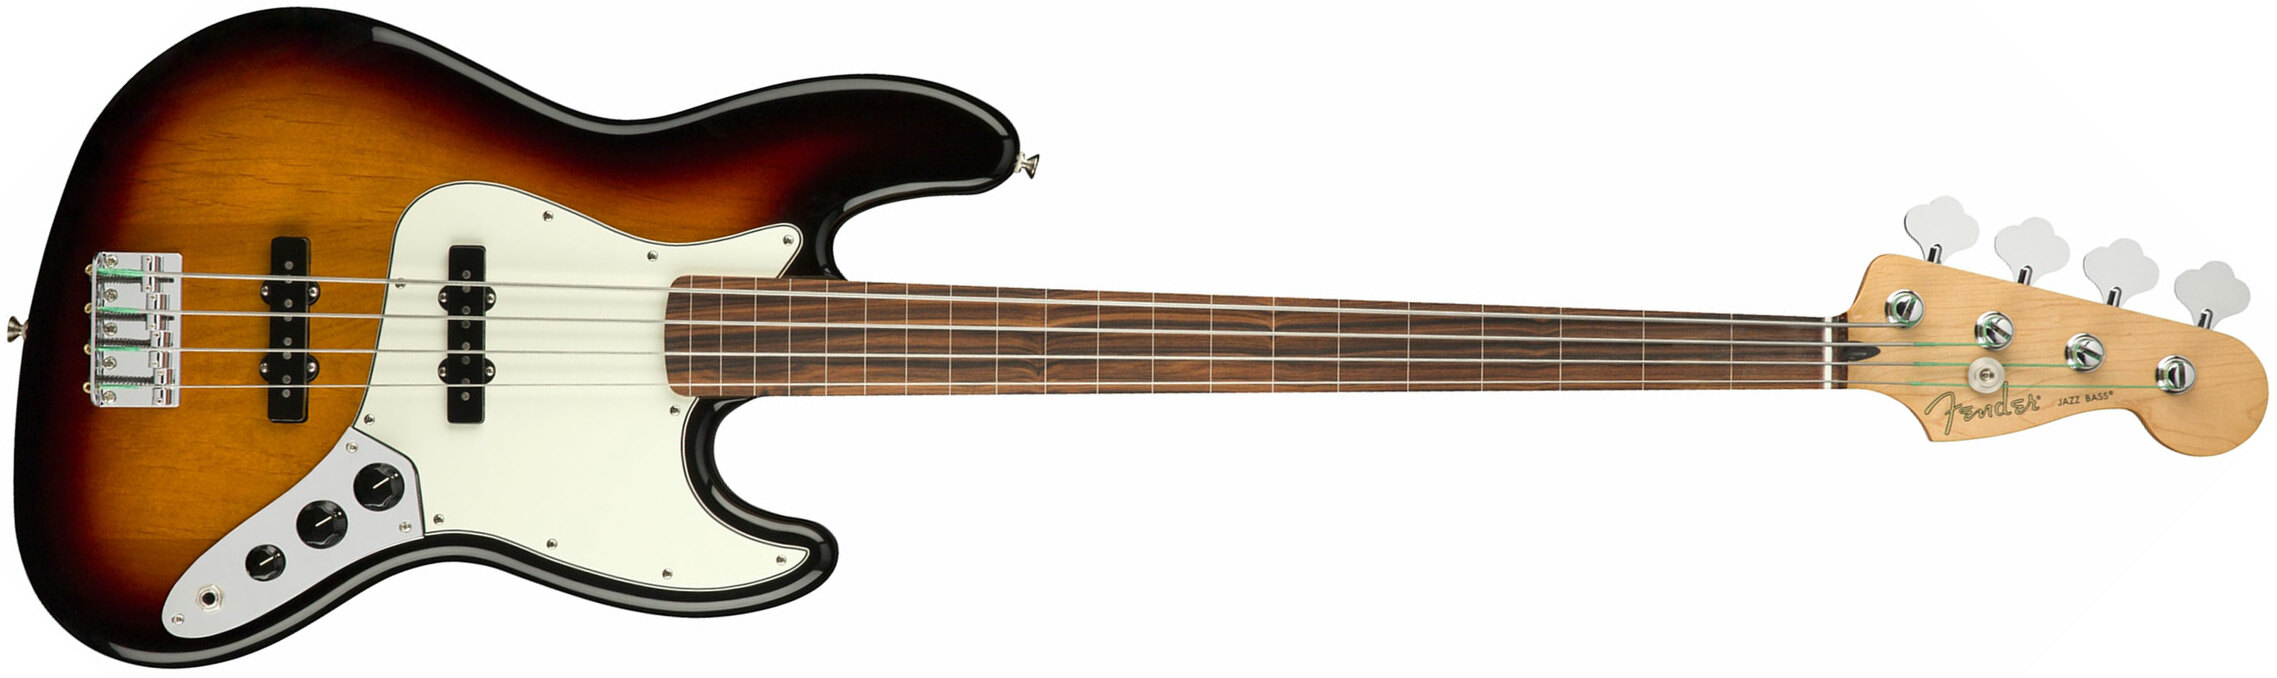 Fender Jazz Bass Player Fretless Mex Pf - 3-color Sunburst - Solid body elektrische bas - Main picture